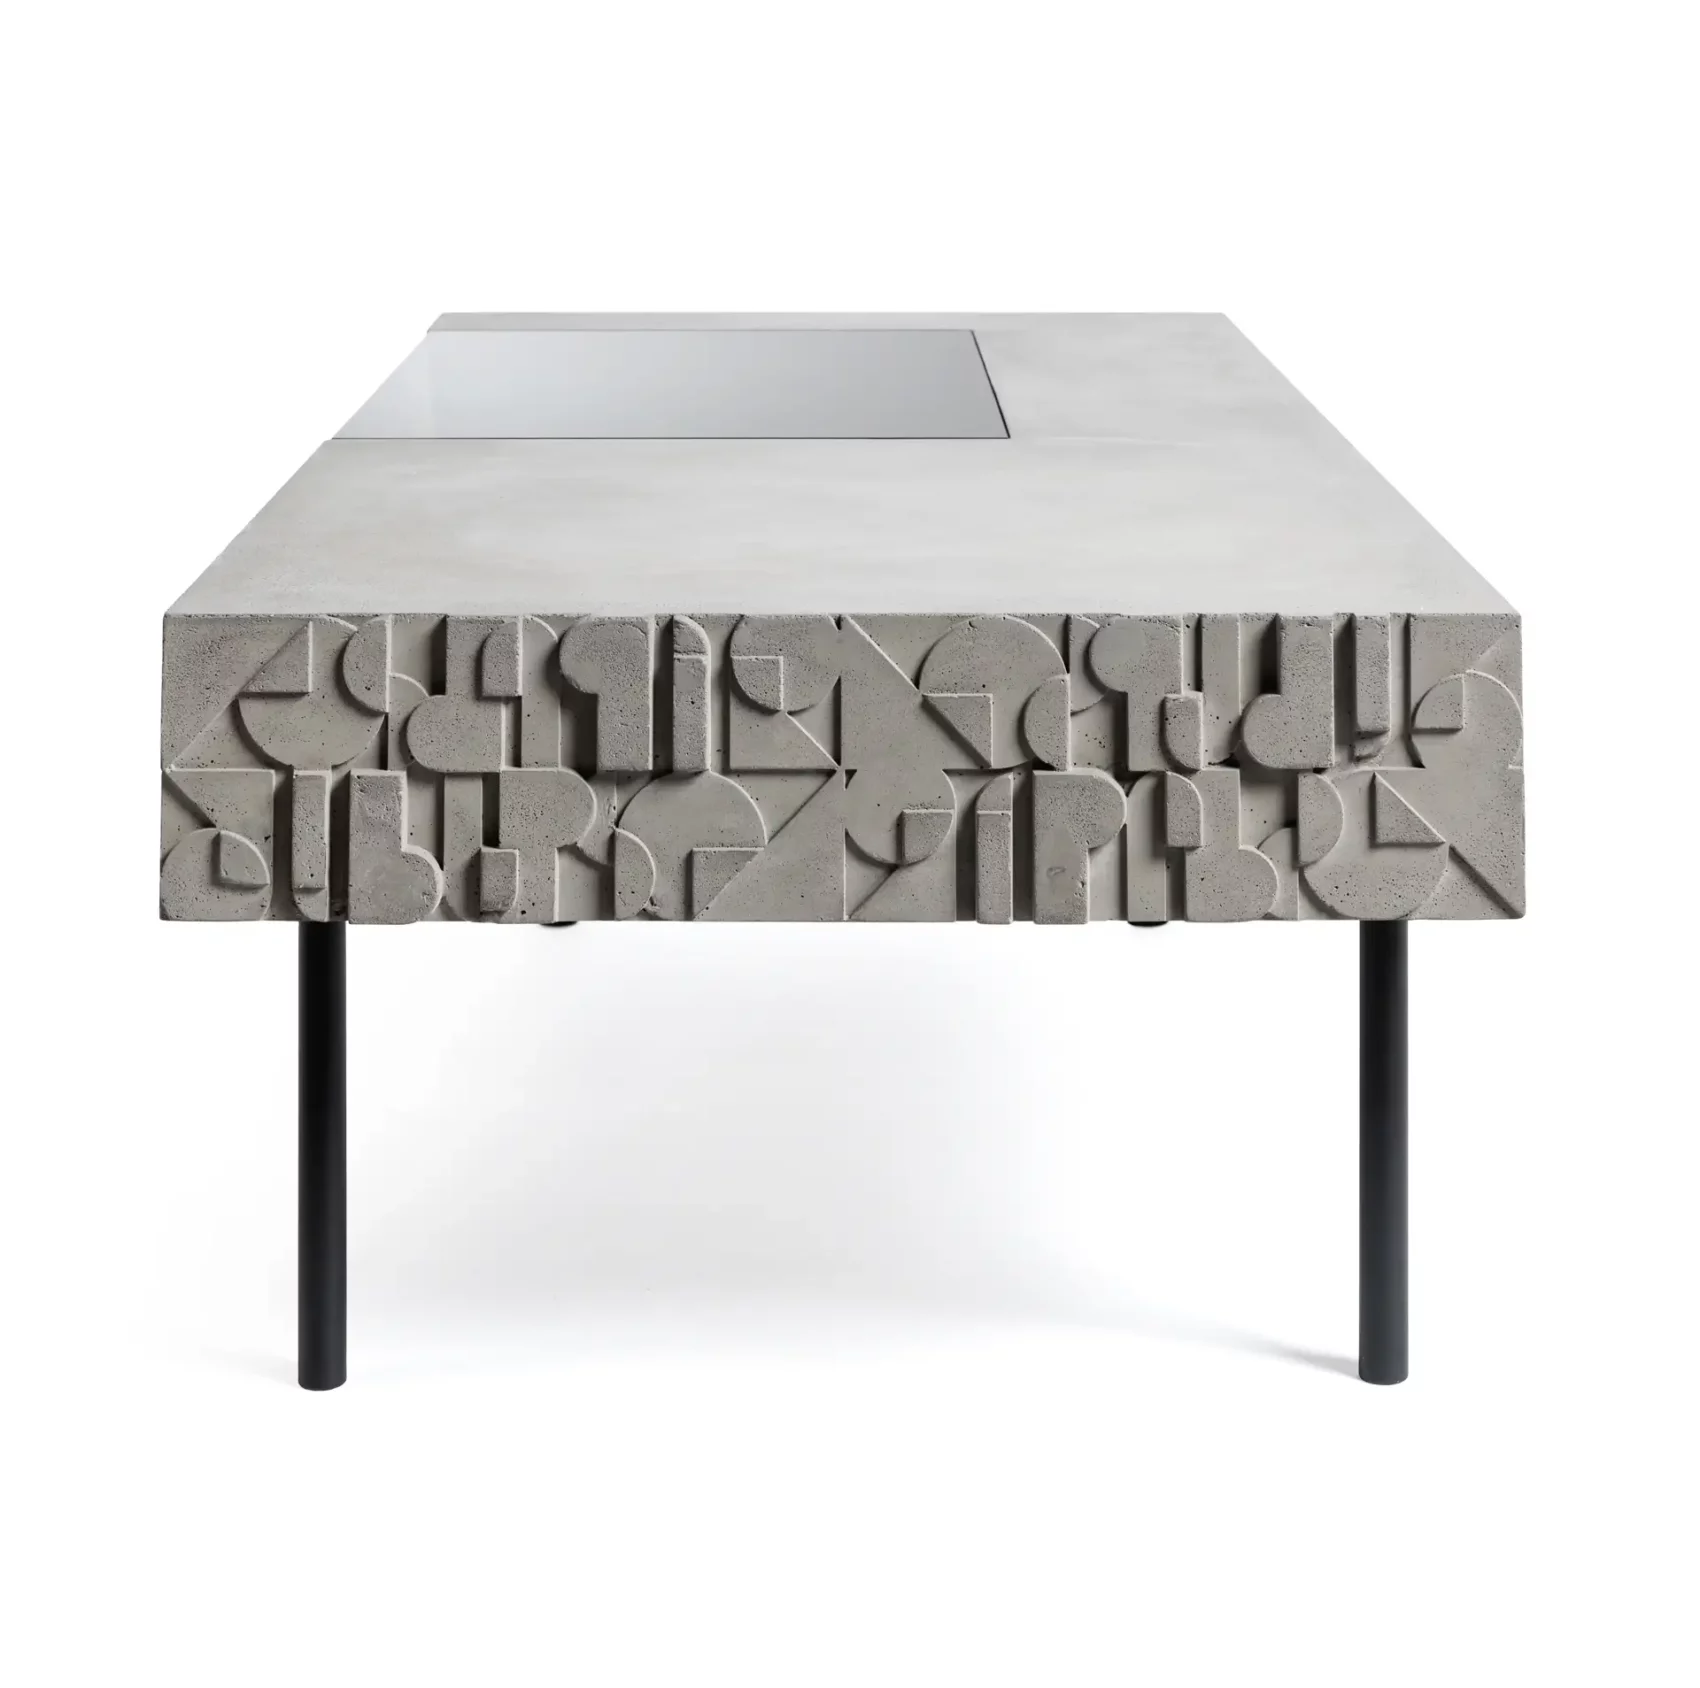 Concrete coffee table with art deco ornamentation by designer Bertrand Jayr